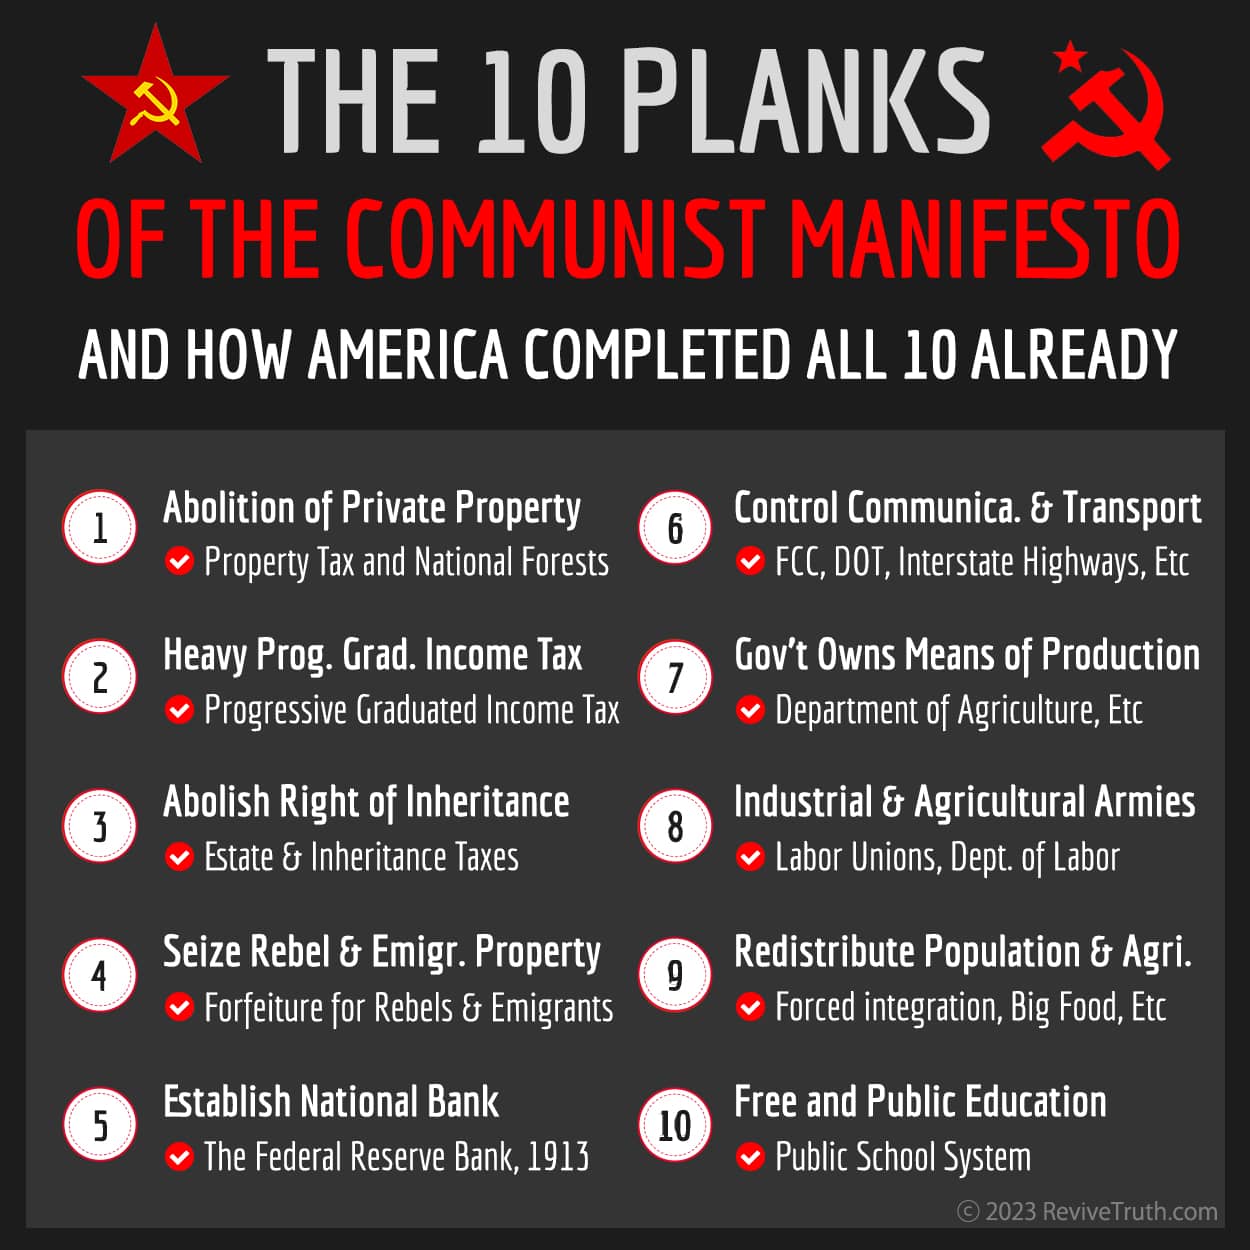 communist-manifesto-and-america